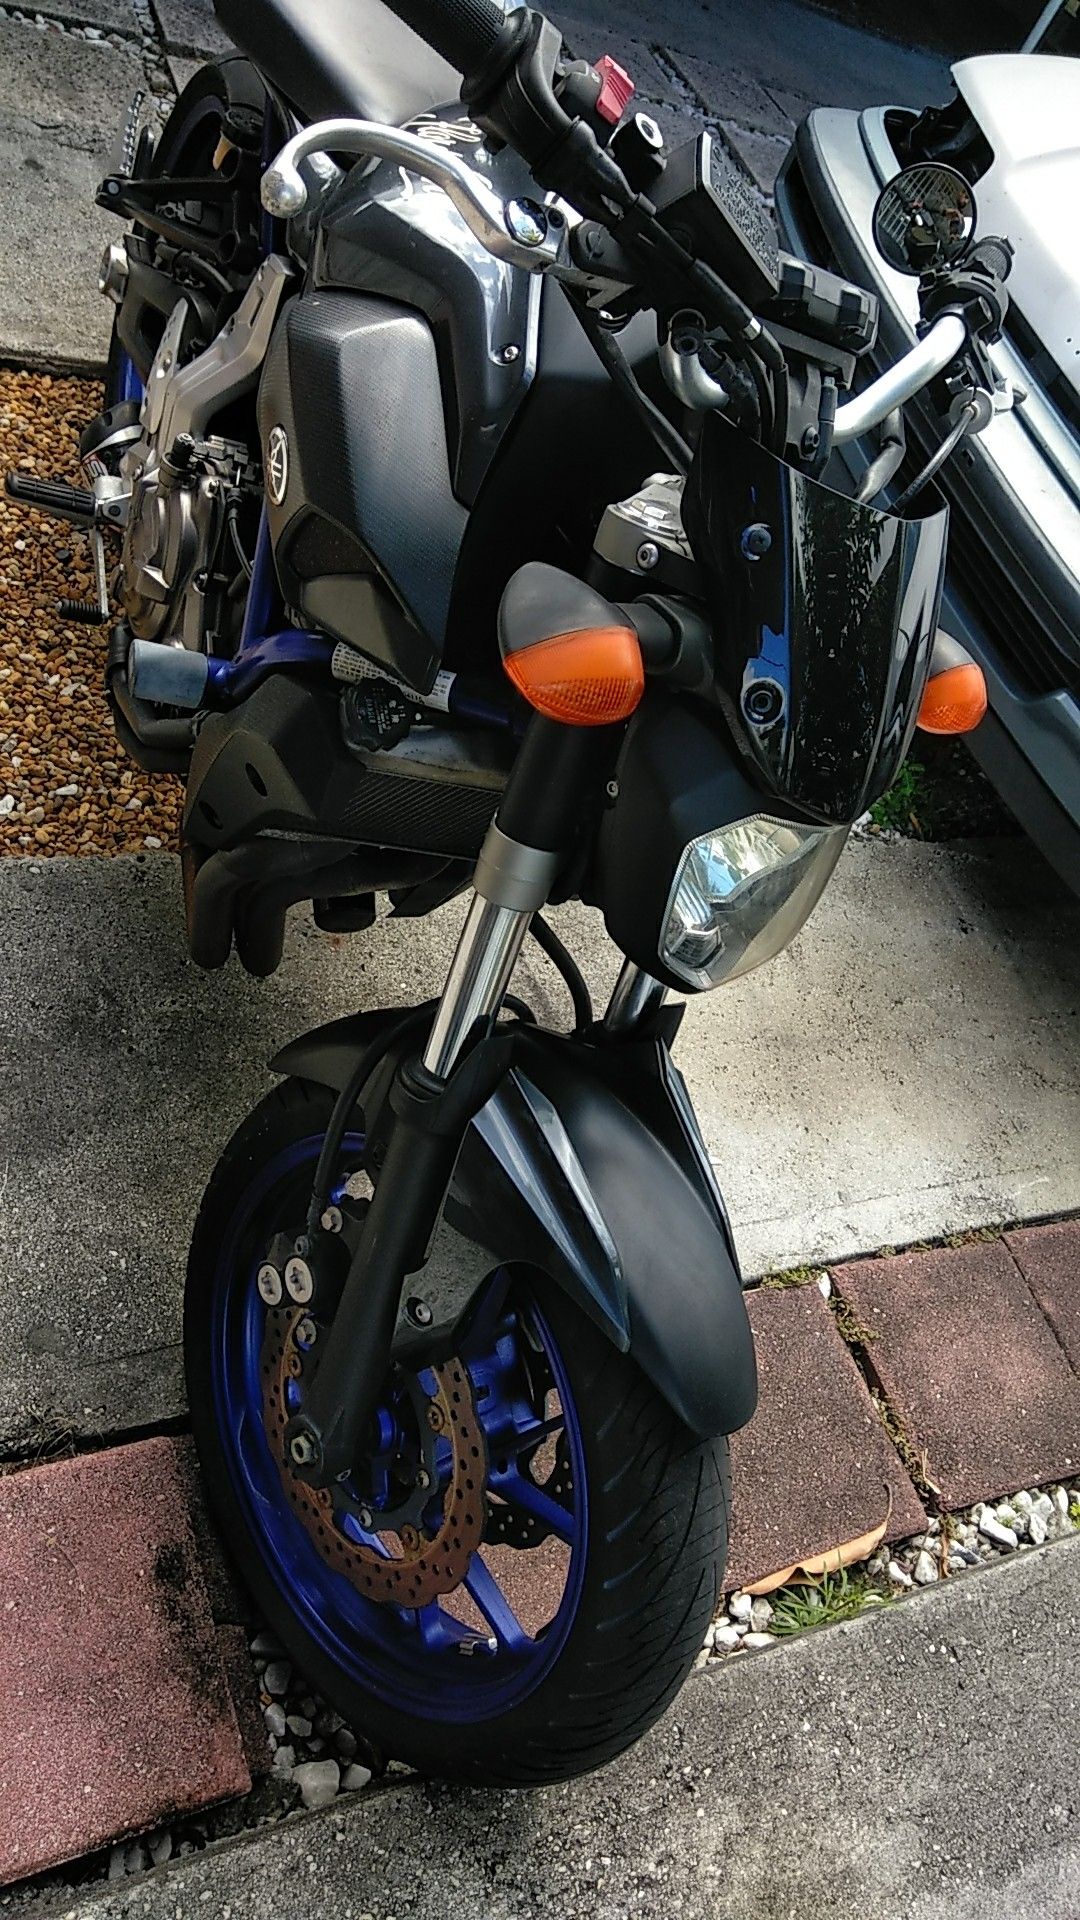 2015 Yamaha FZ-07 Motorcycle 700cc (needs little work)